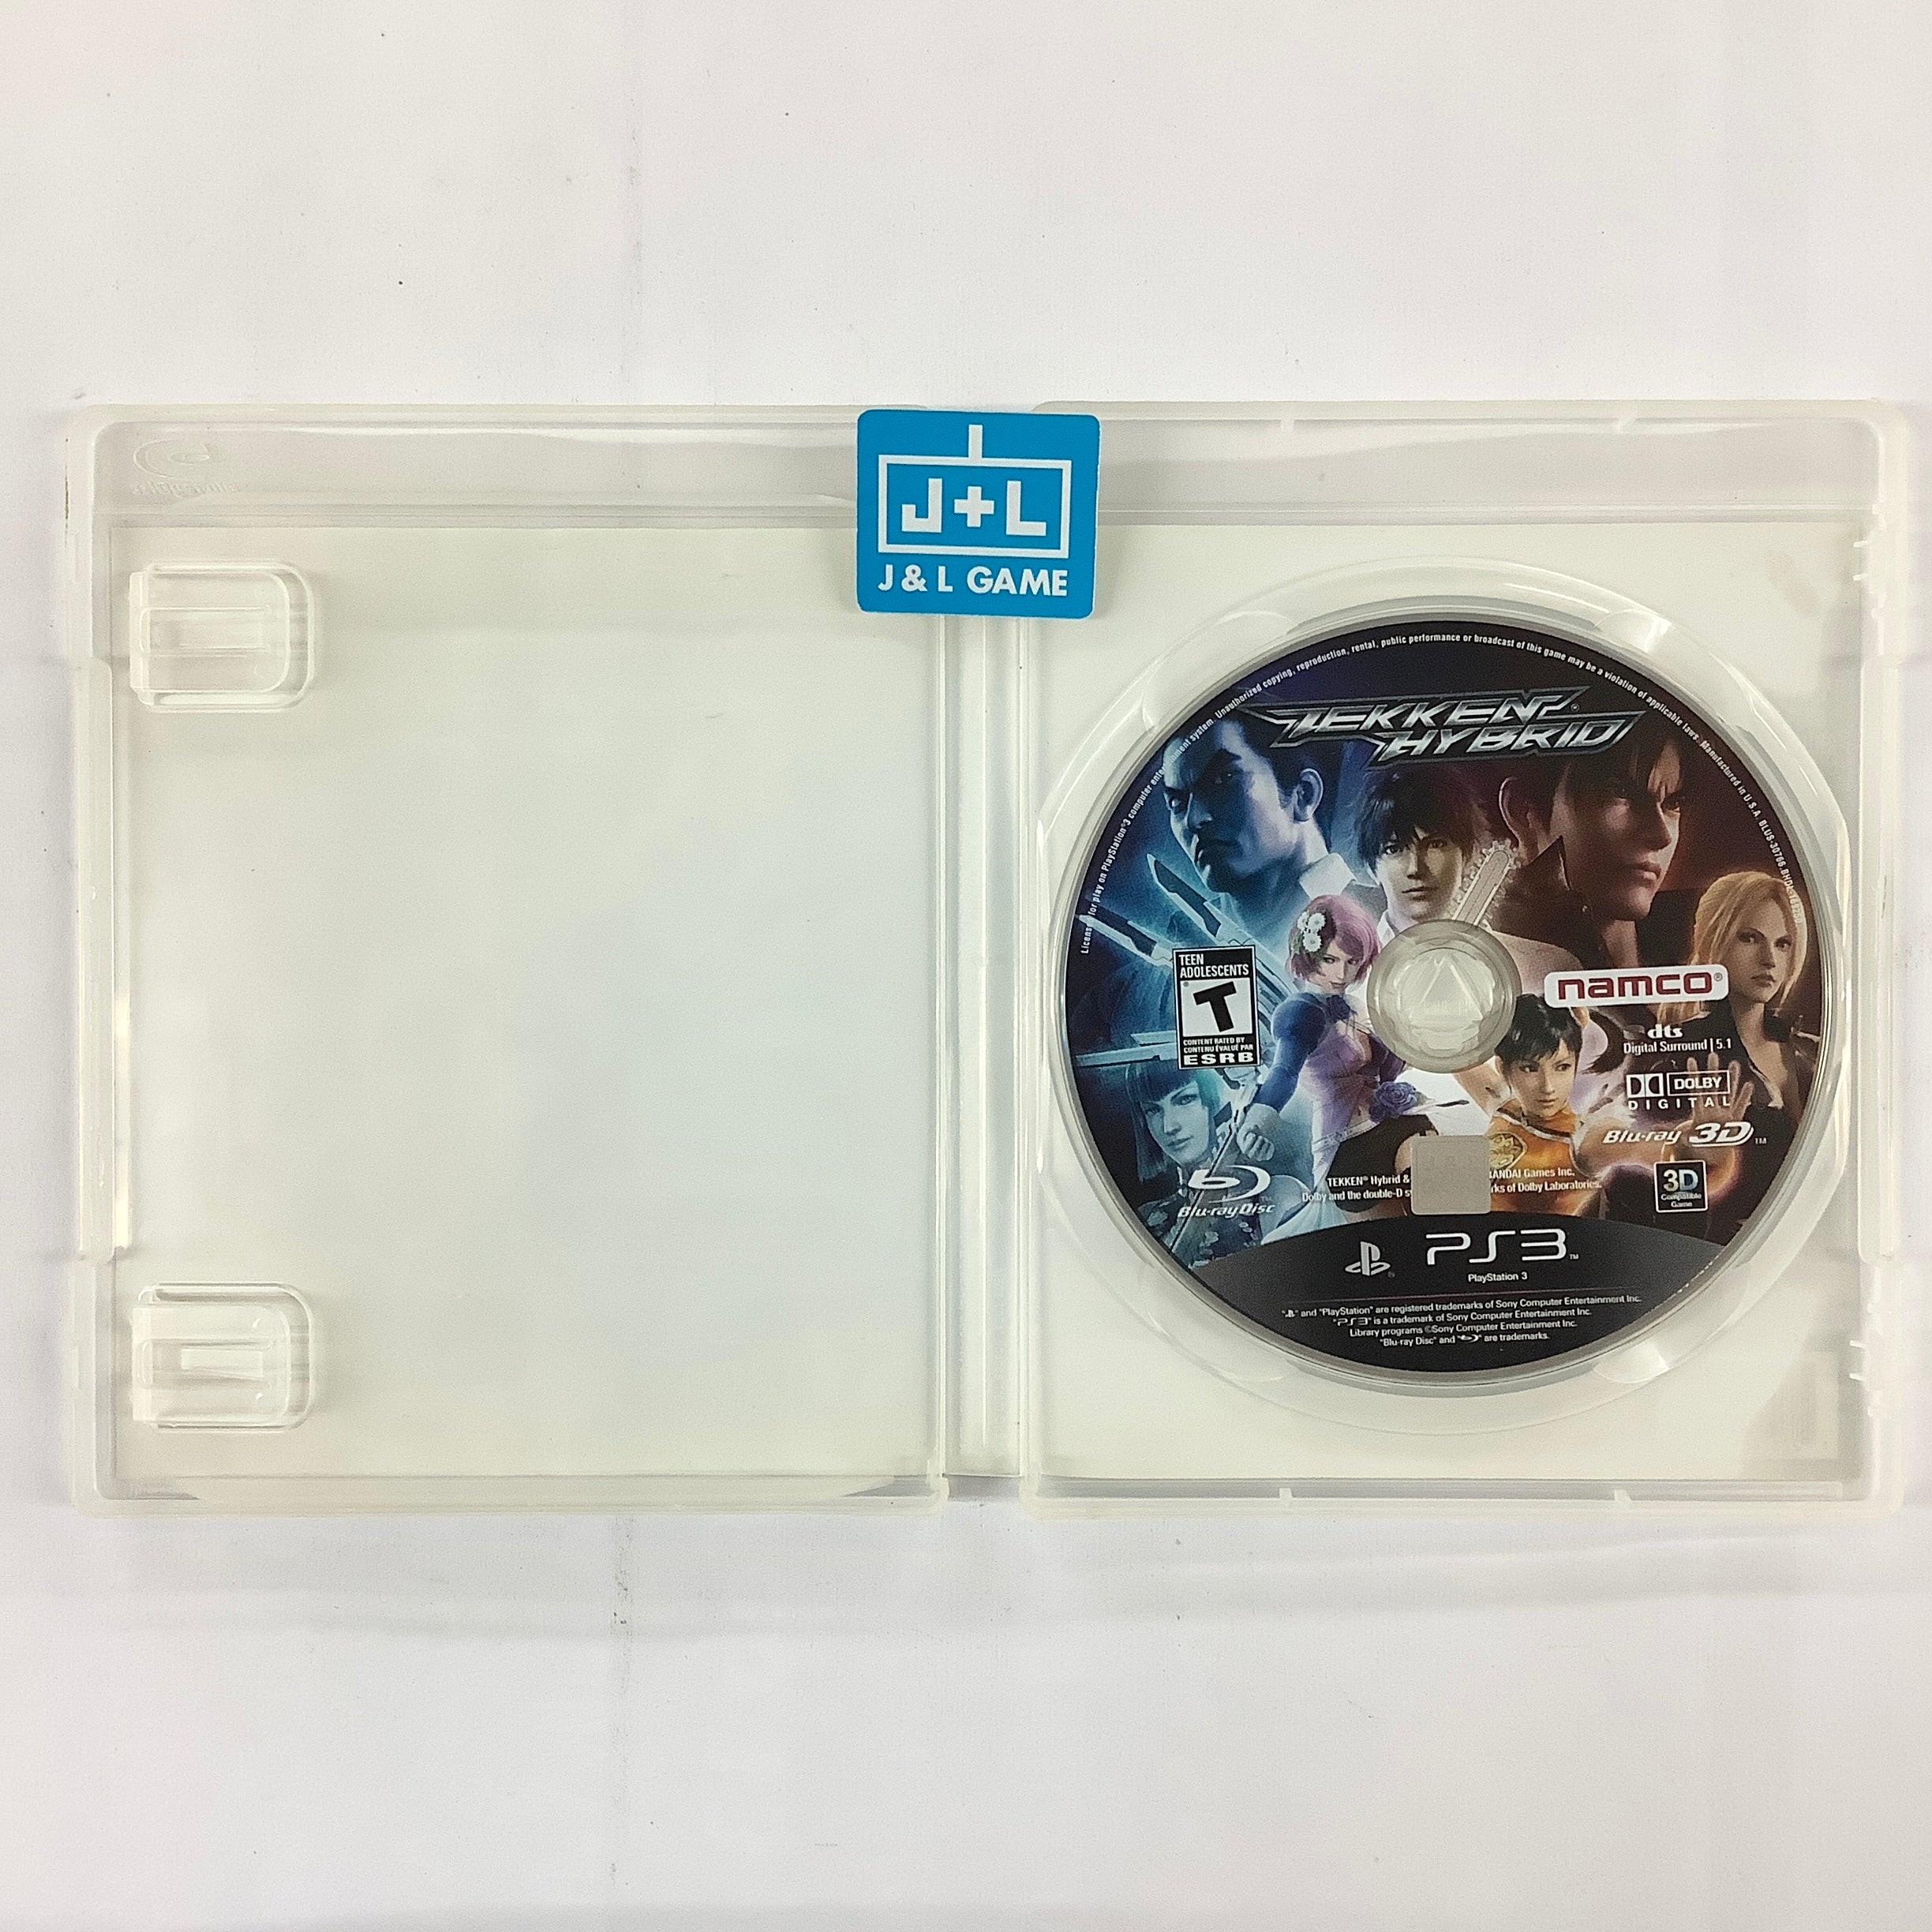 Tekken Hybrid - (PS3) PlayStation 3 [Pre-Owned] Video Games Namco Bandai Games   